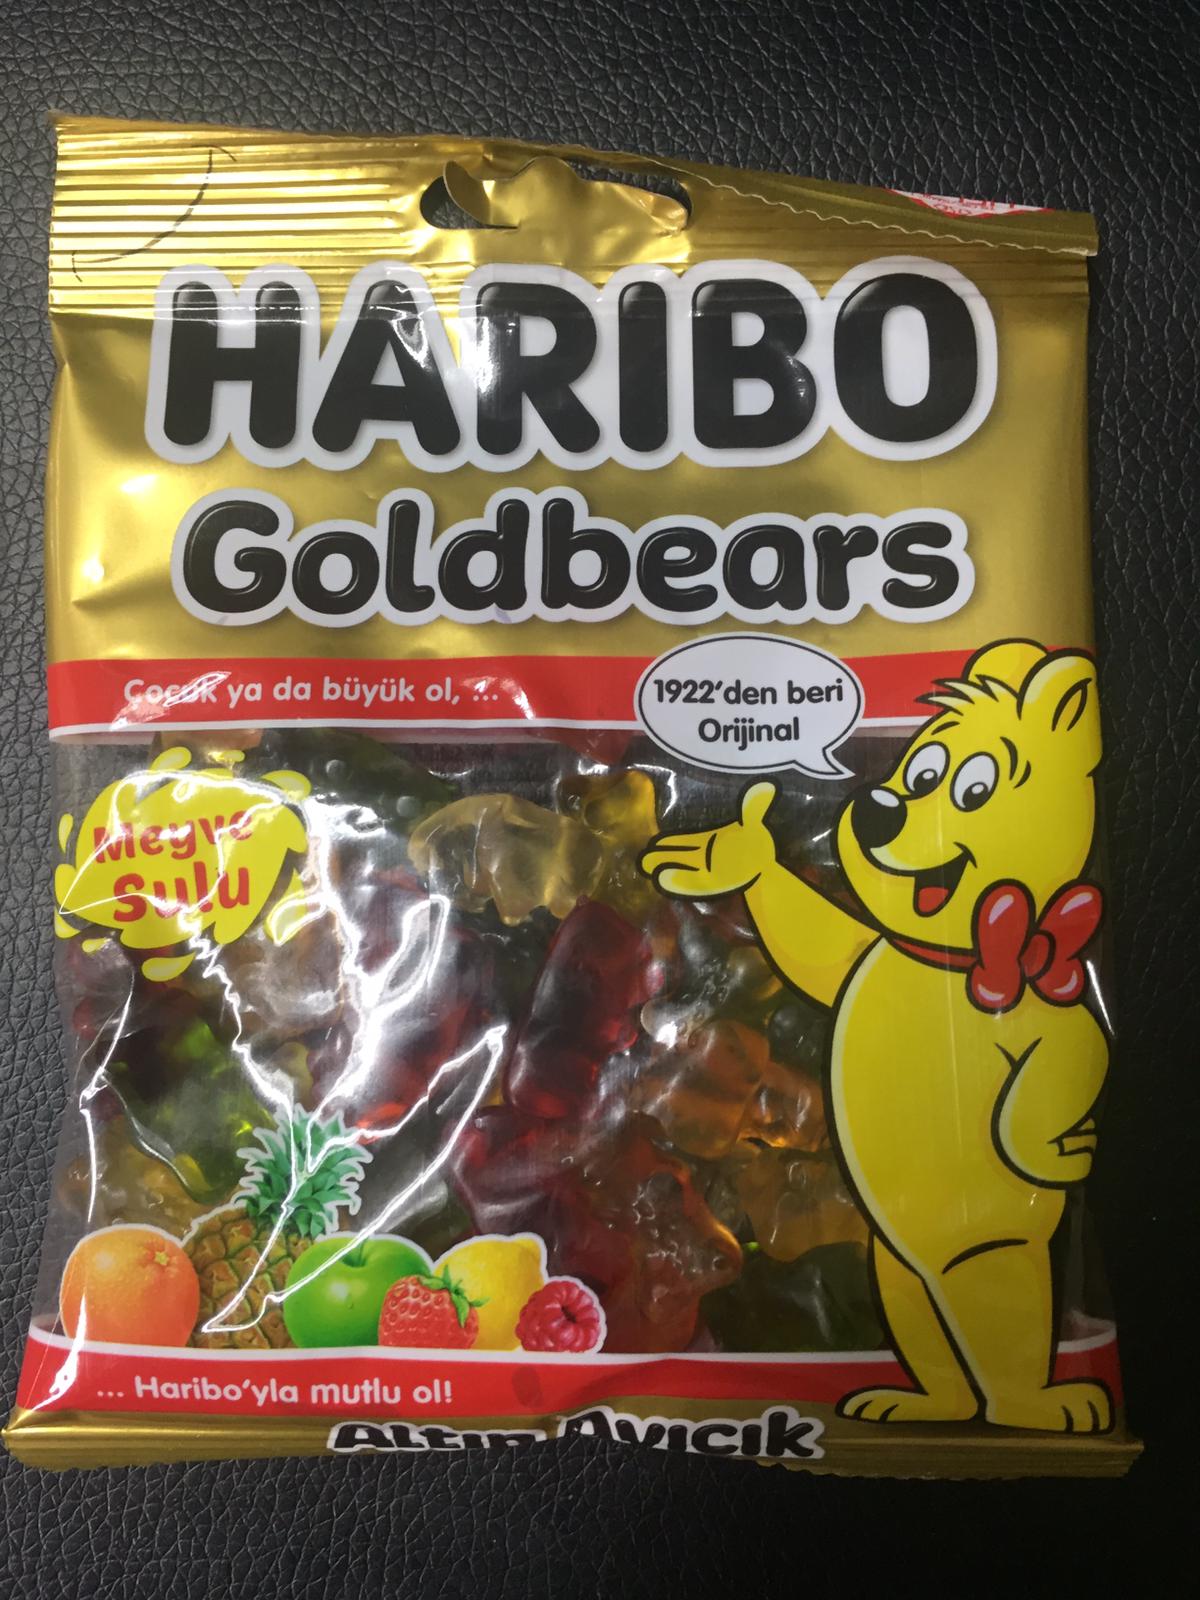 Haribo Goldbears Halal